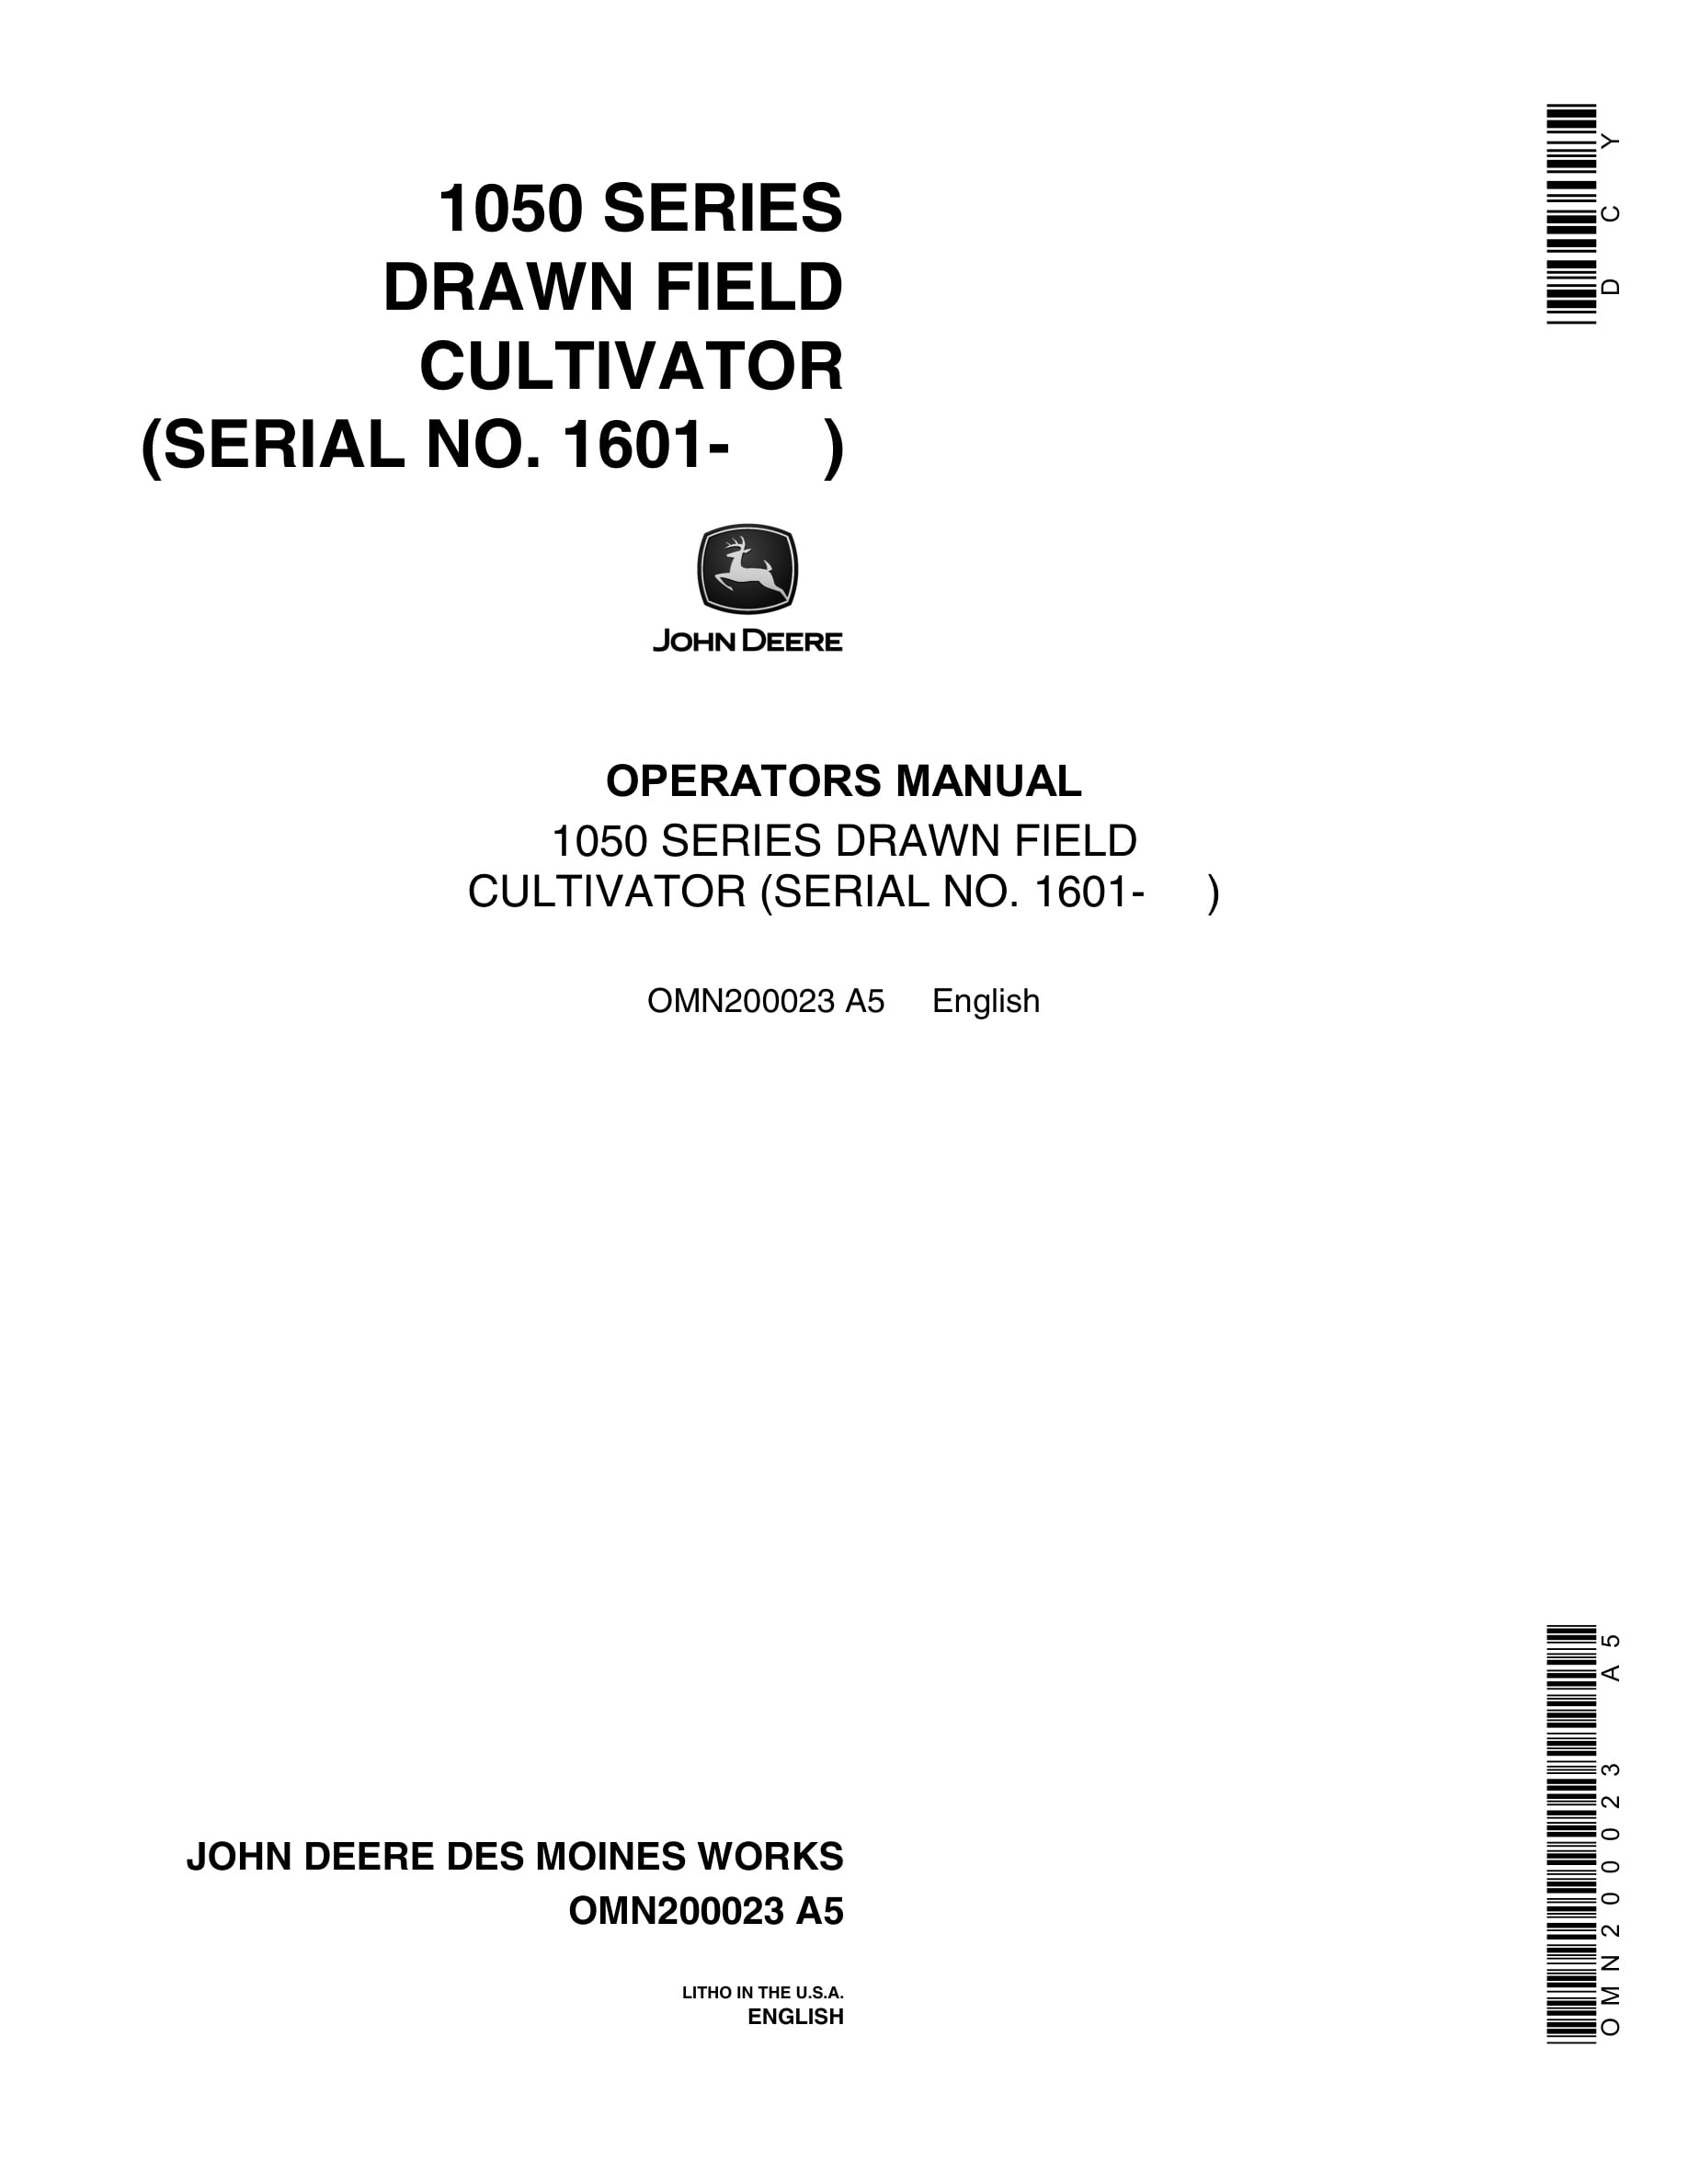 John Deere 1050 SERIES DRAWN FIELD CULTIVATOR Operator Manual OMN200023-1